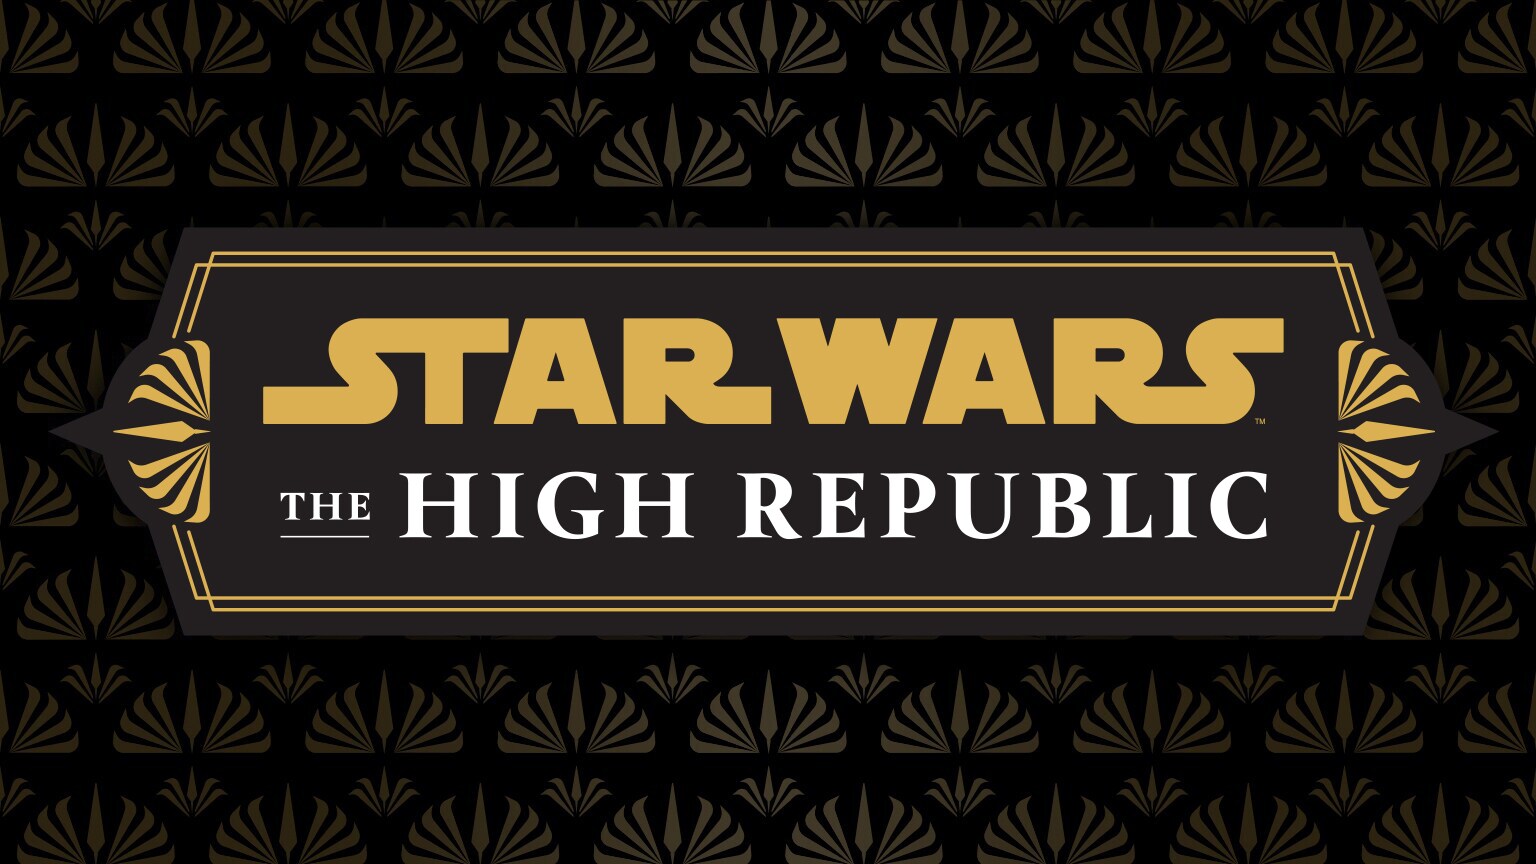 The High Republic logo